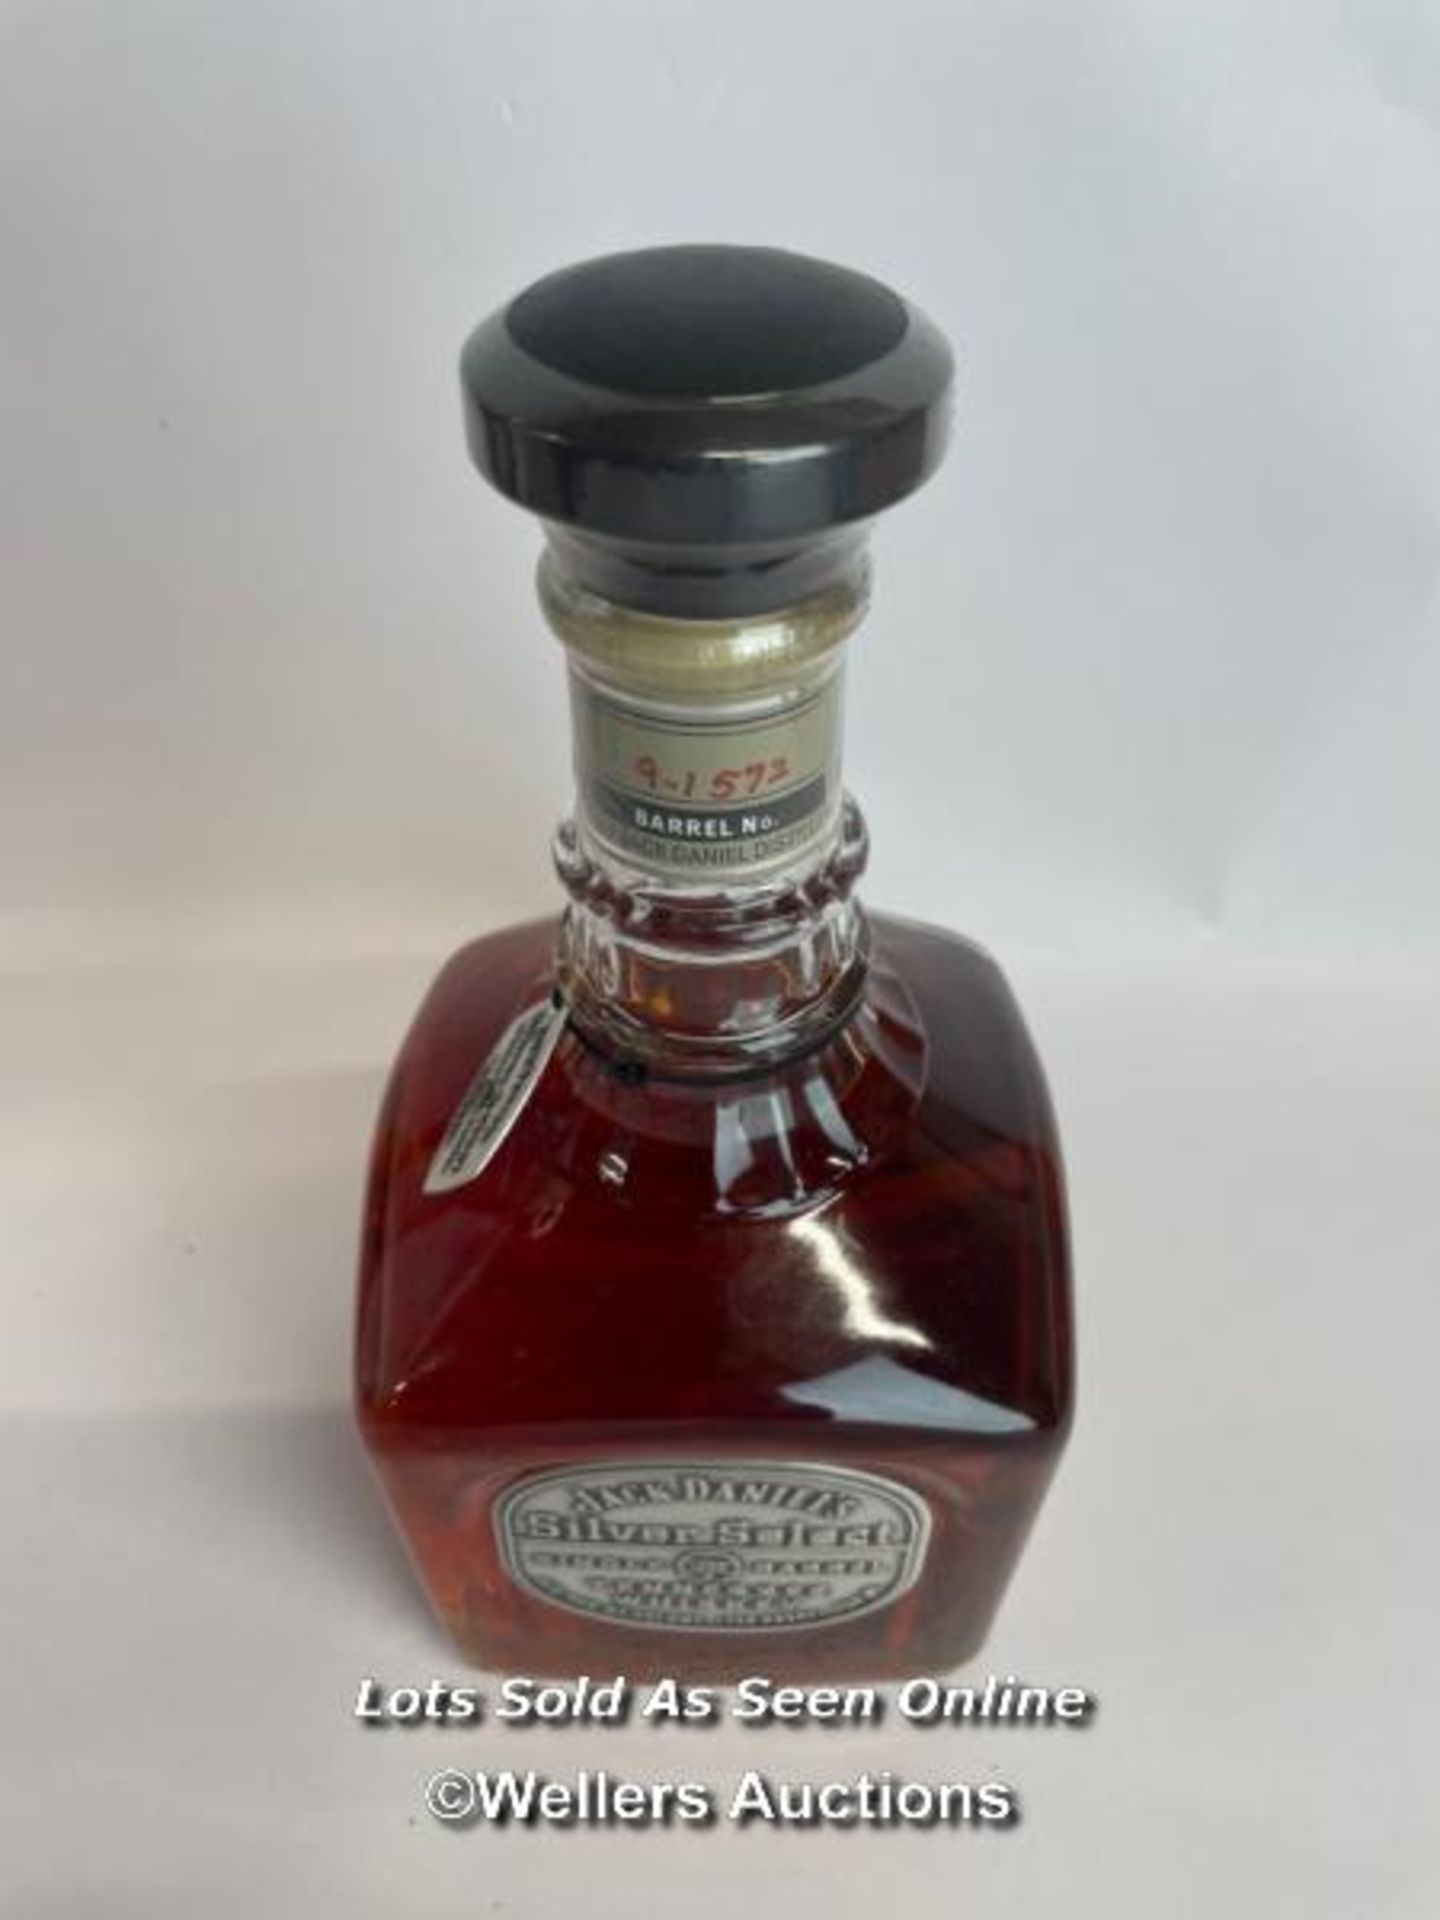 Jack Daniels Silver Select Single Barrel Tennessee Whiskey, Release date: 11-03-99, Barrek no: 9- - Image 5 of 8